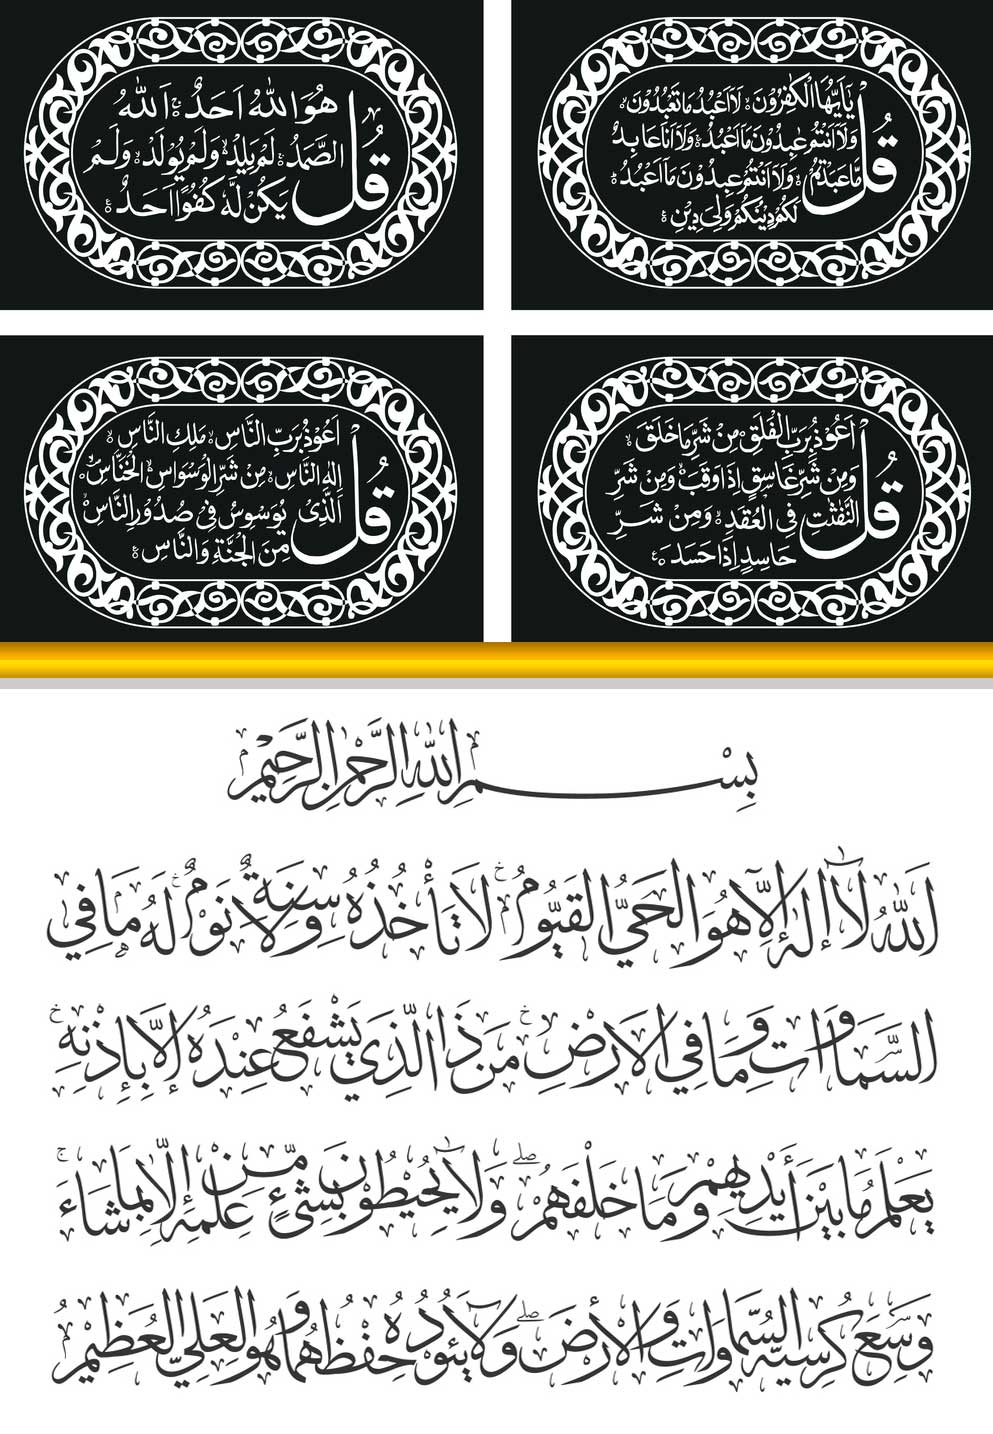 4qul and ayatul kursi in arabic<br />
